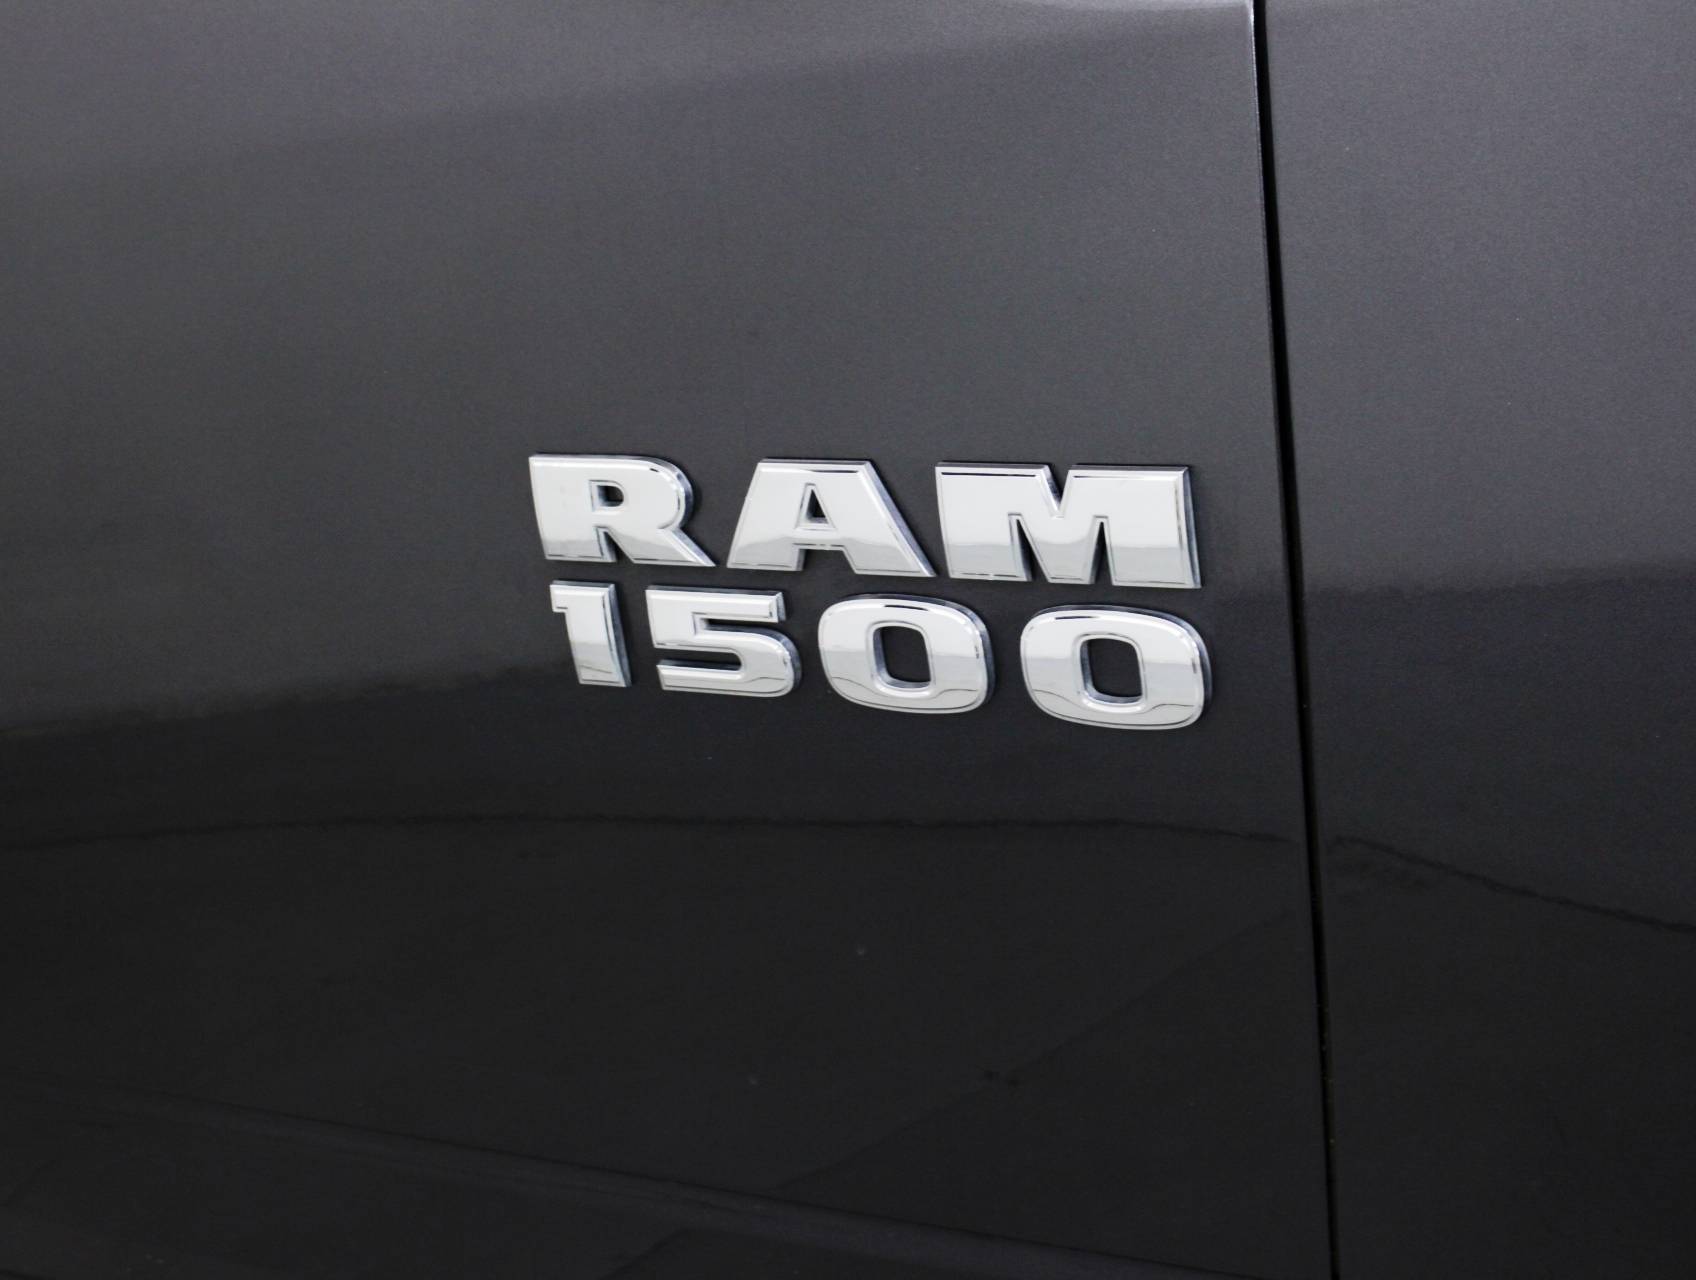 Florida Fine Cars - Used RAM 1500 2017 MIAMI Express